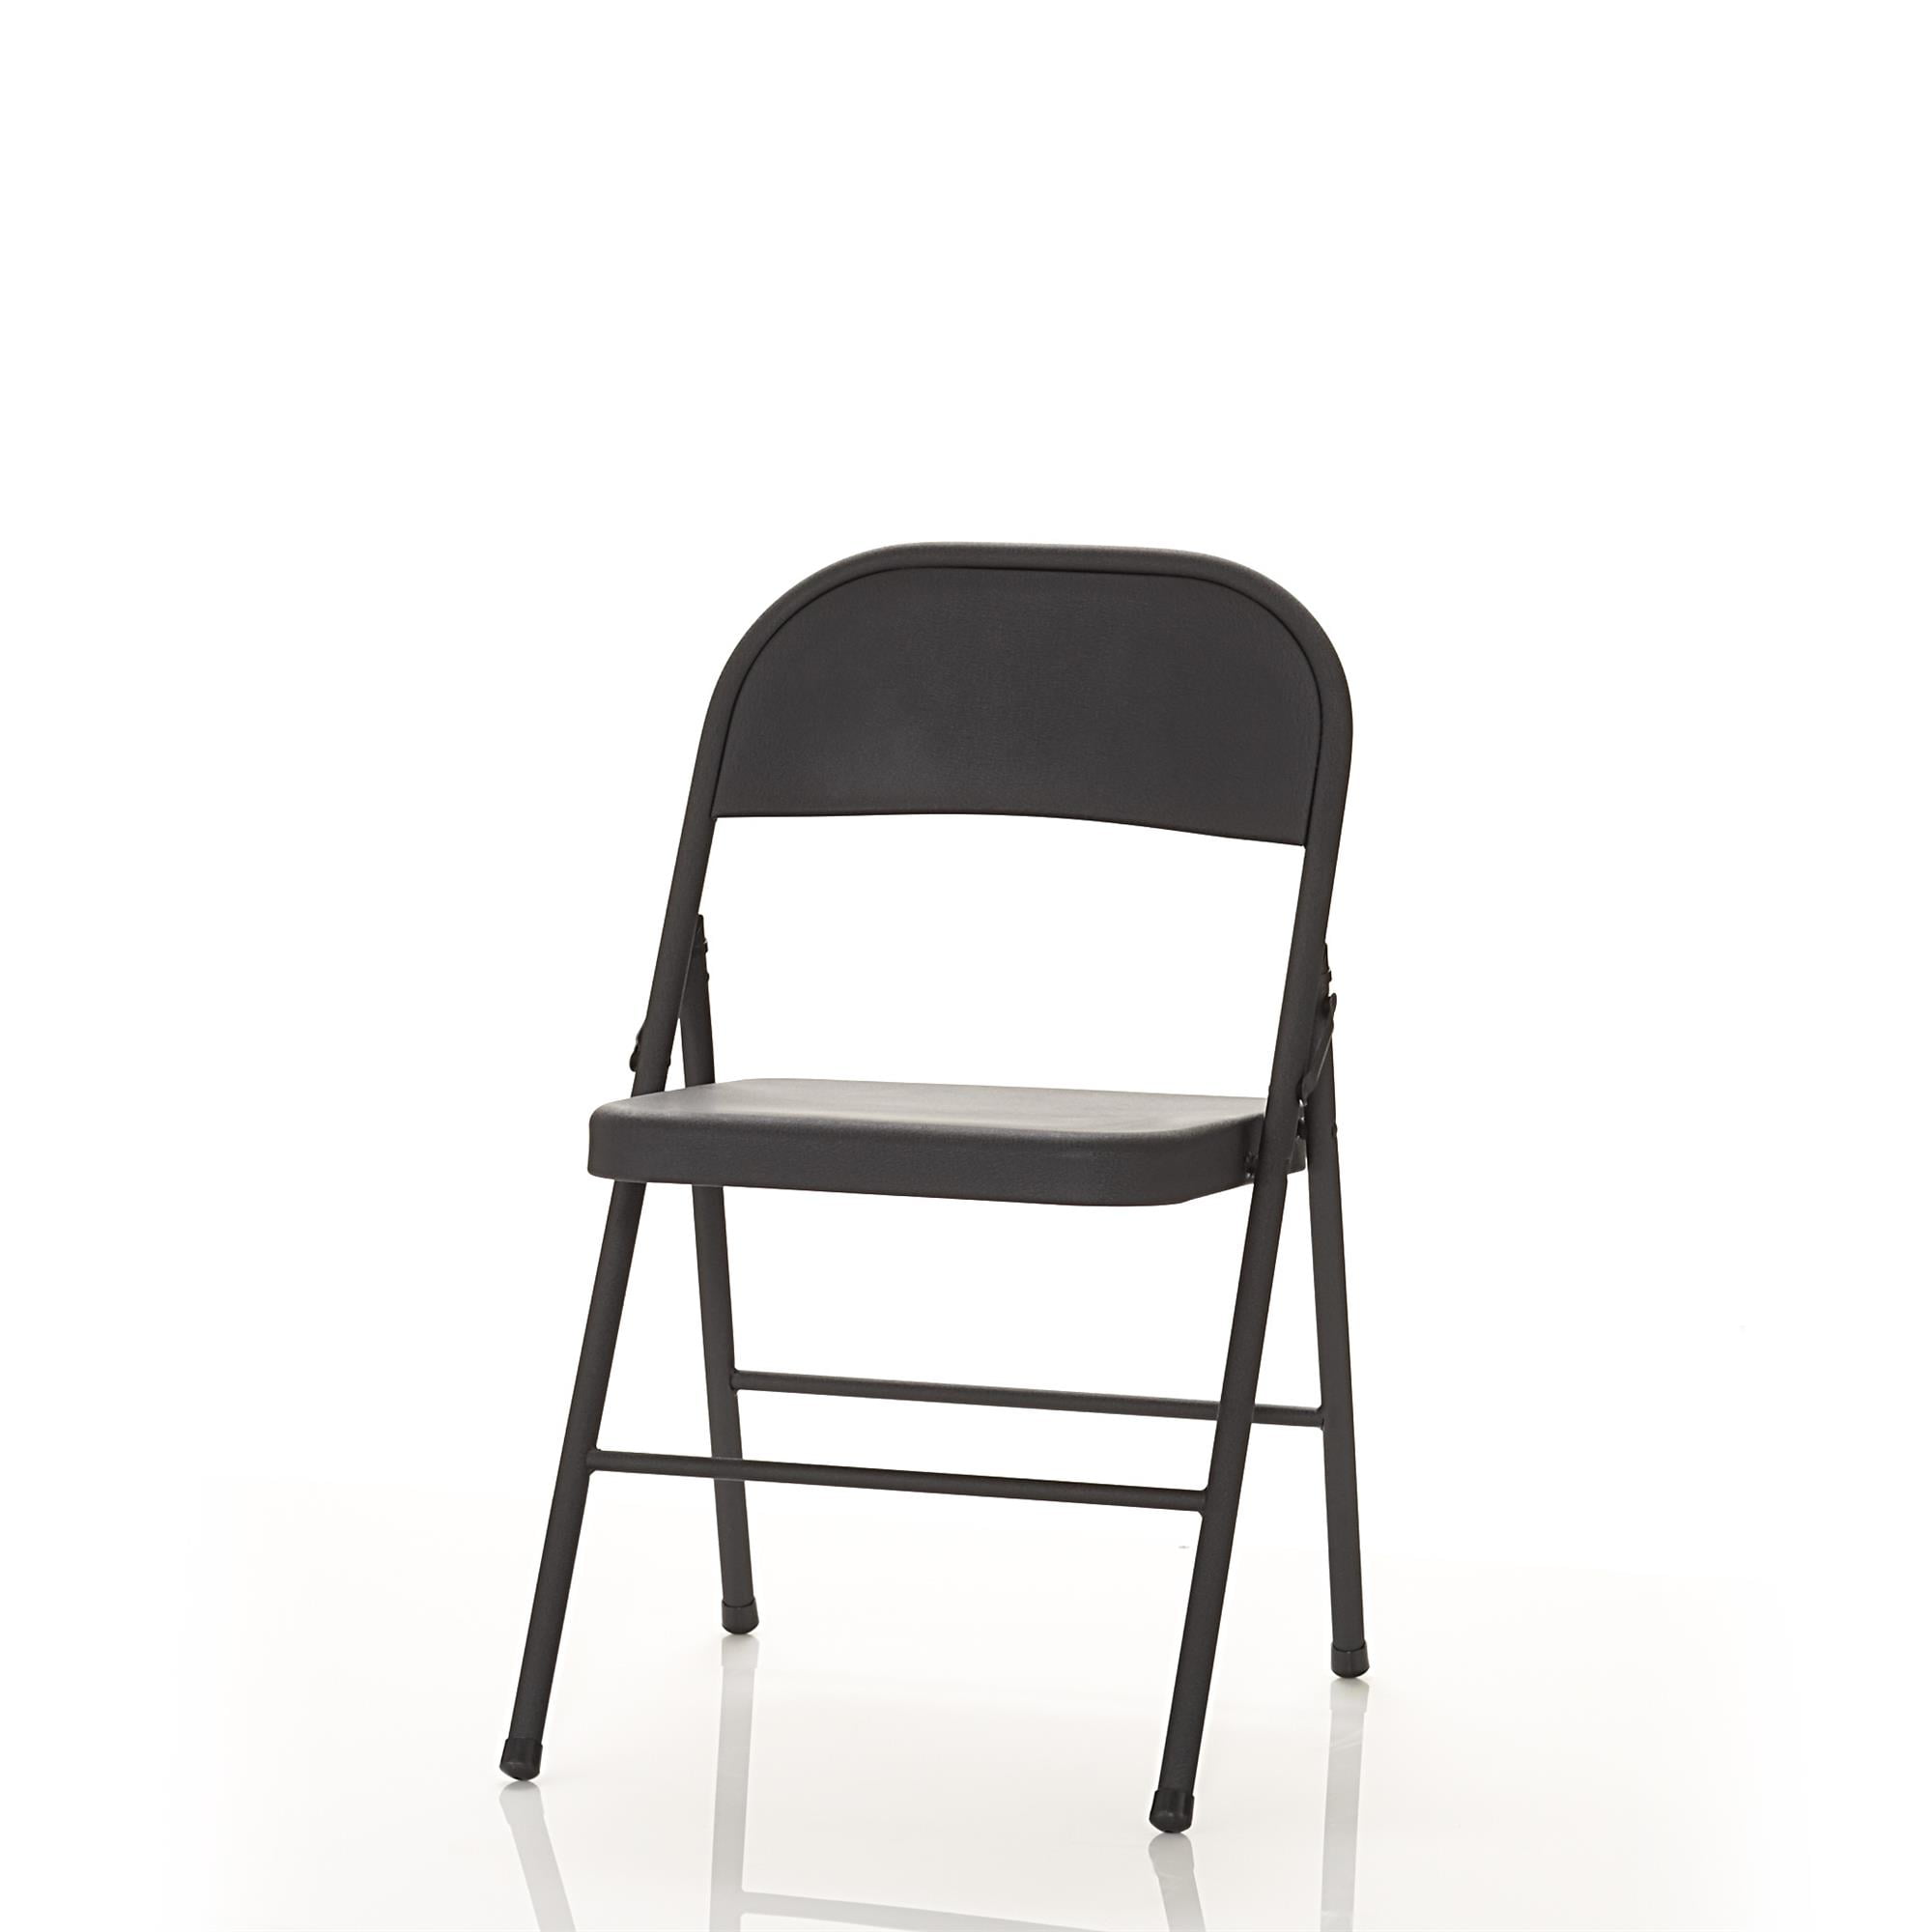 Mainstays Steel Folding Chair (4 Pack), Black